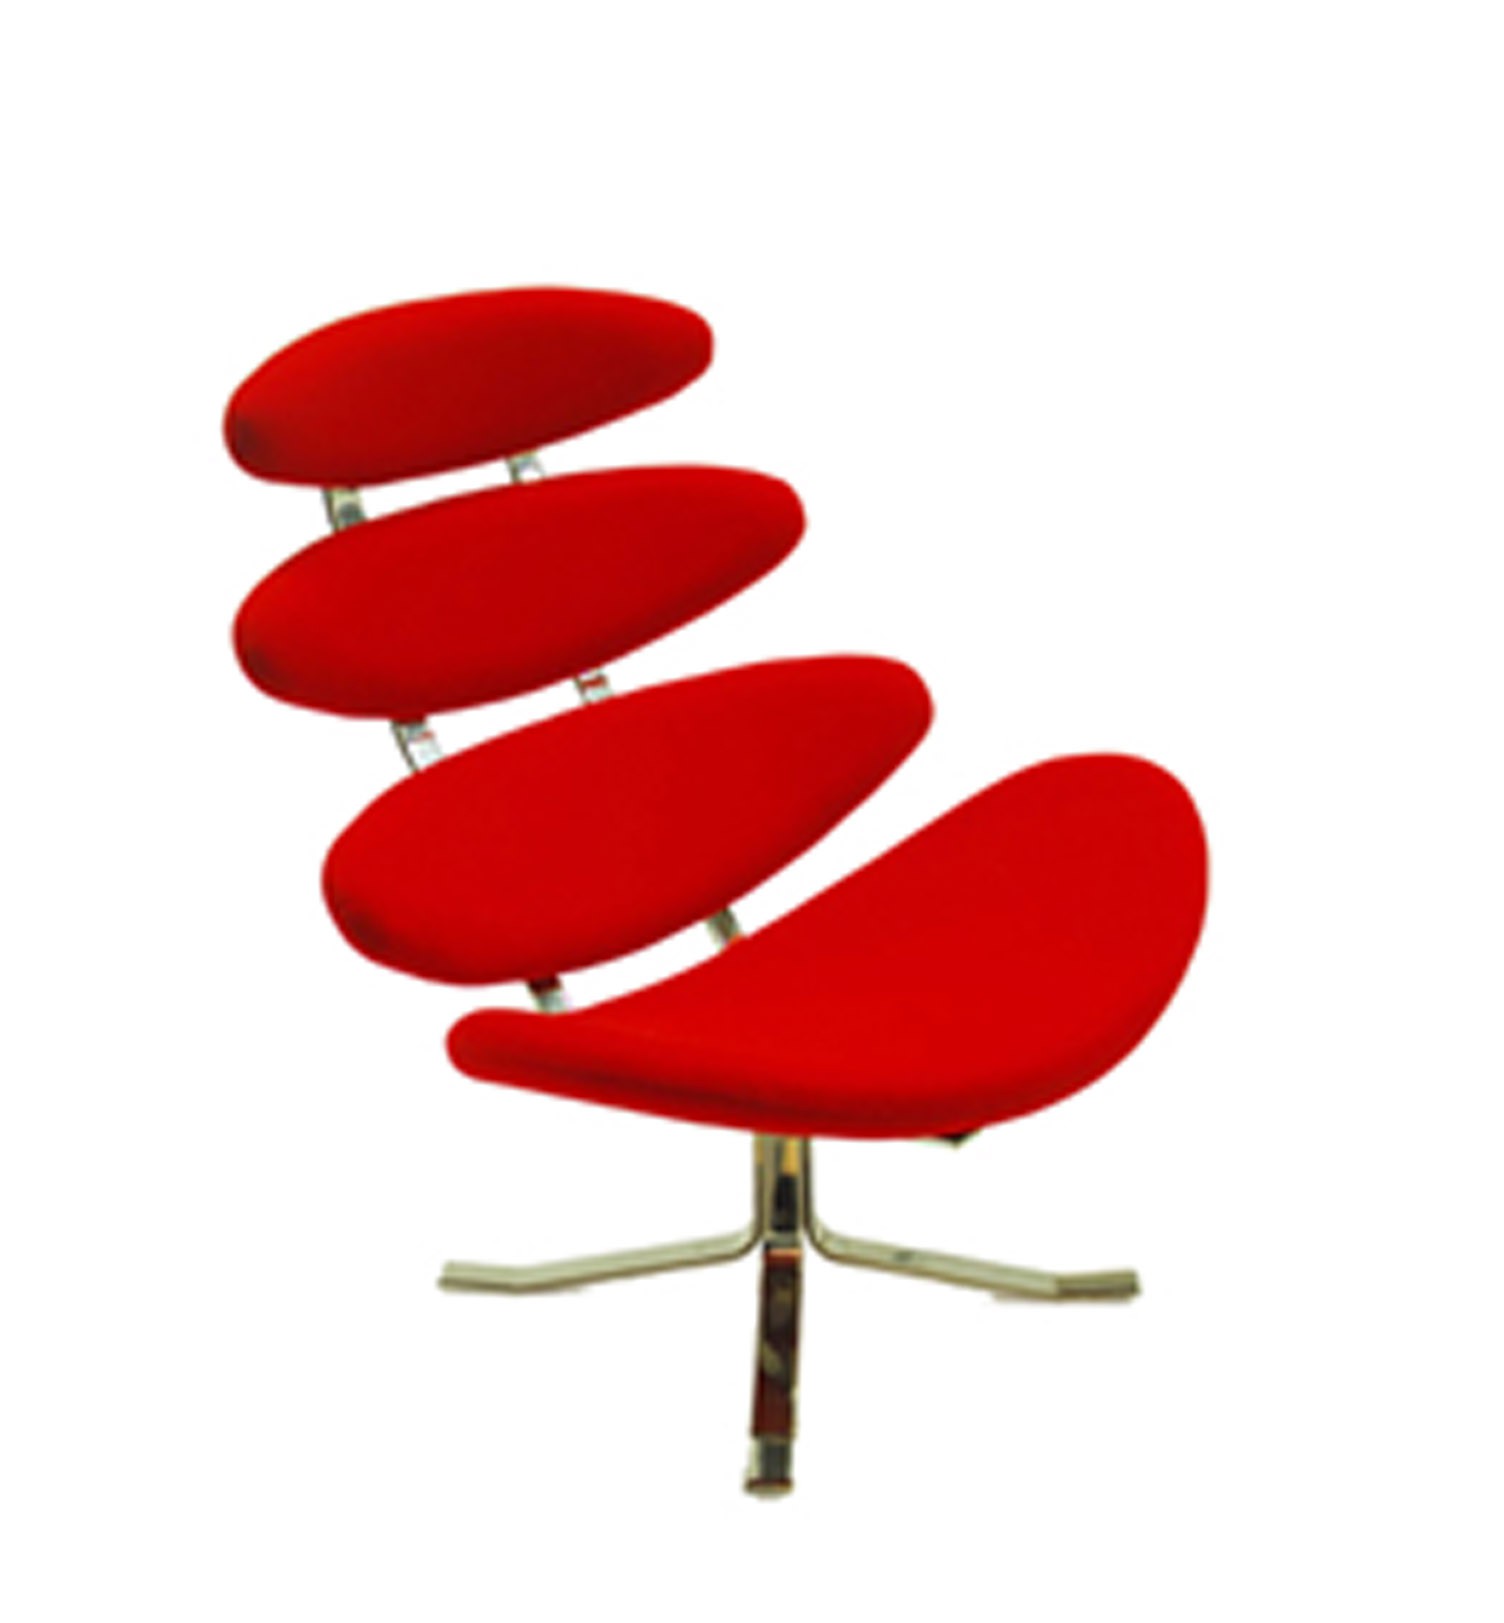 Кресло Scott Howard Poul Volther Style Corona Chair & Ottoman красная кожа